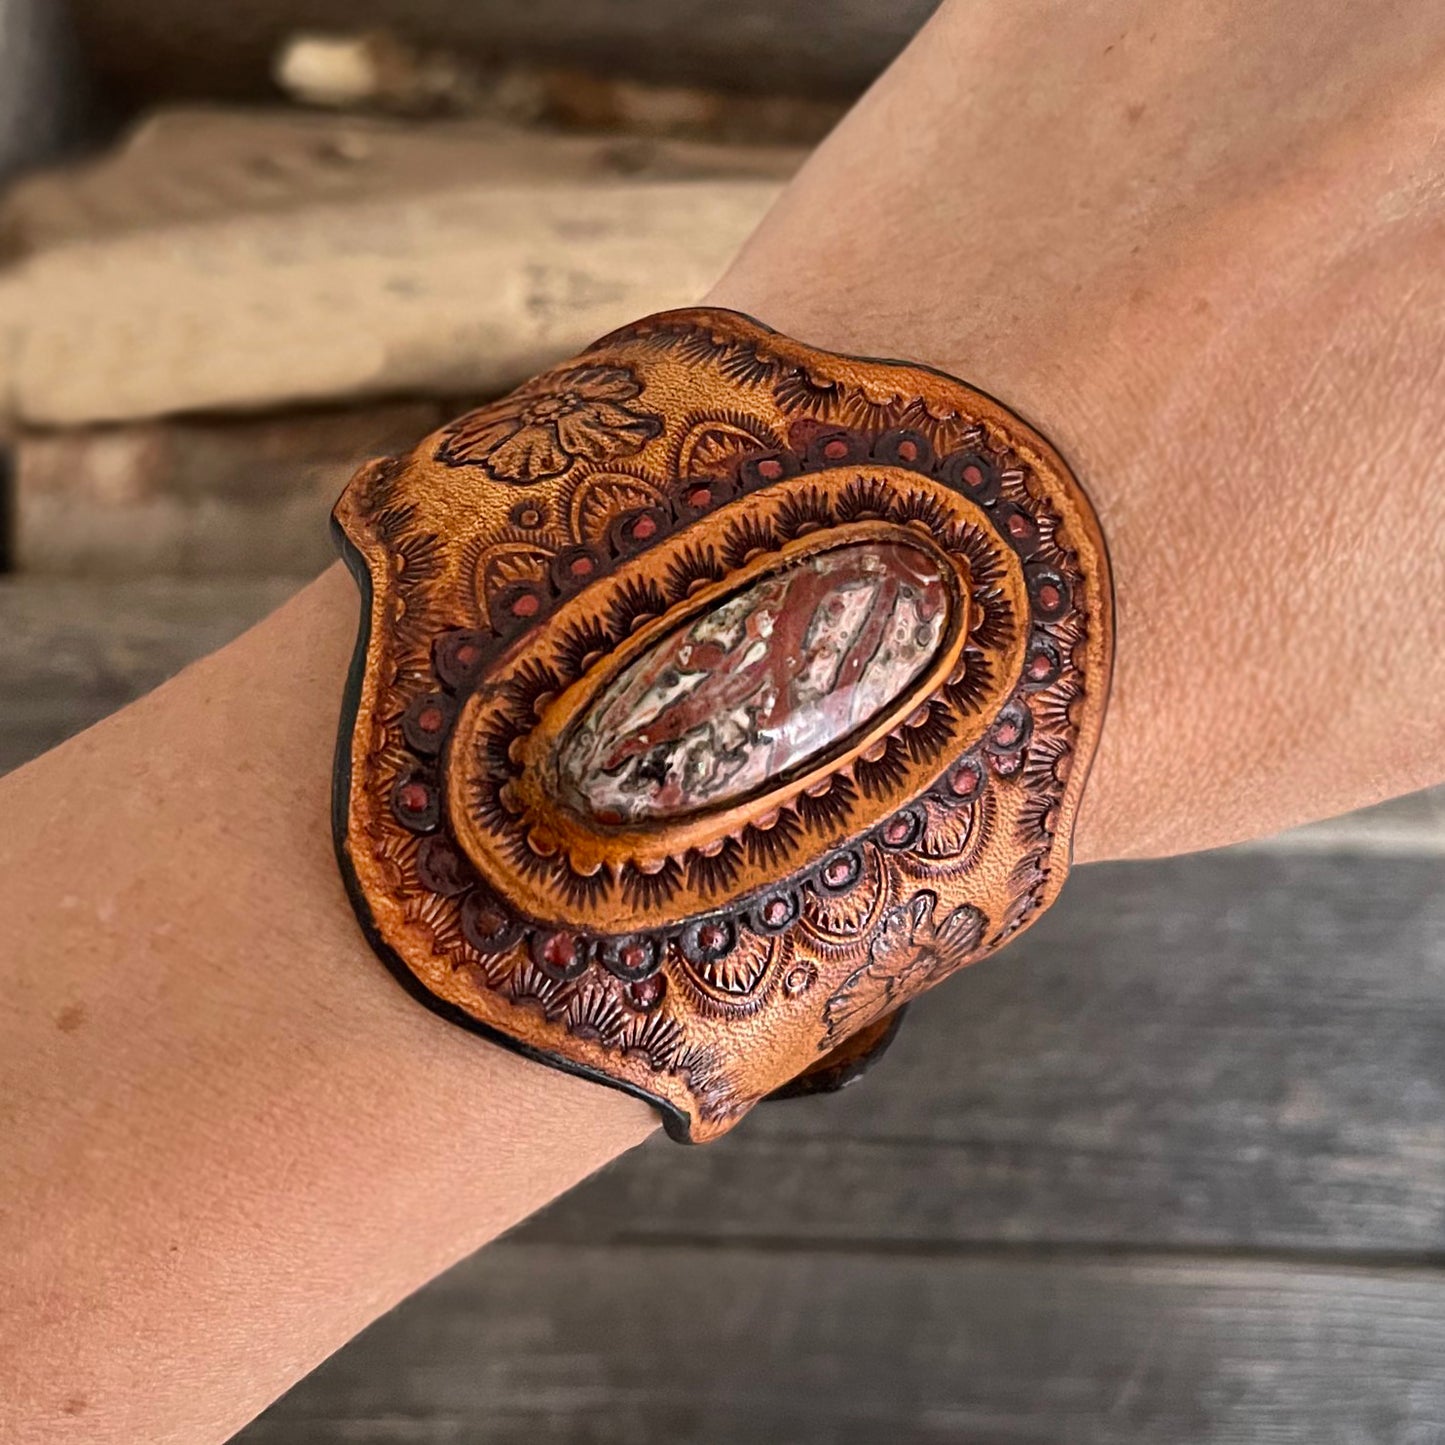 One of a Kind tooled leather bracelet with genuine Leopard Skin Jasper stone